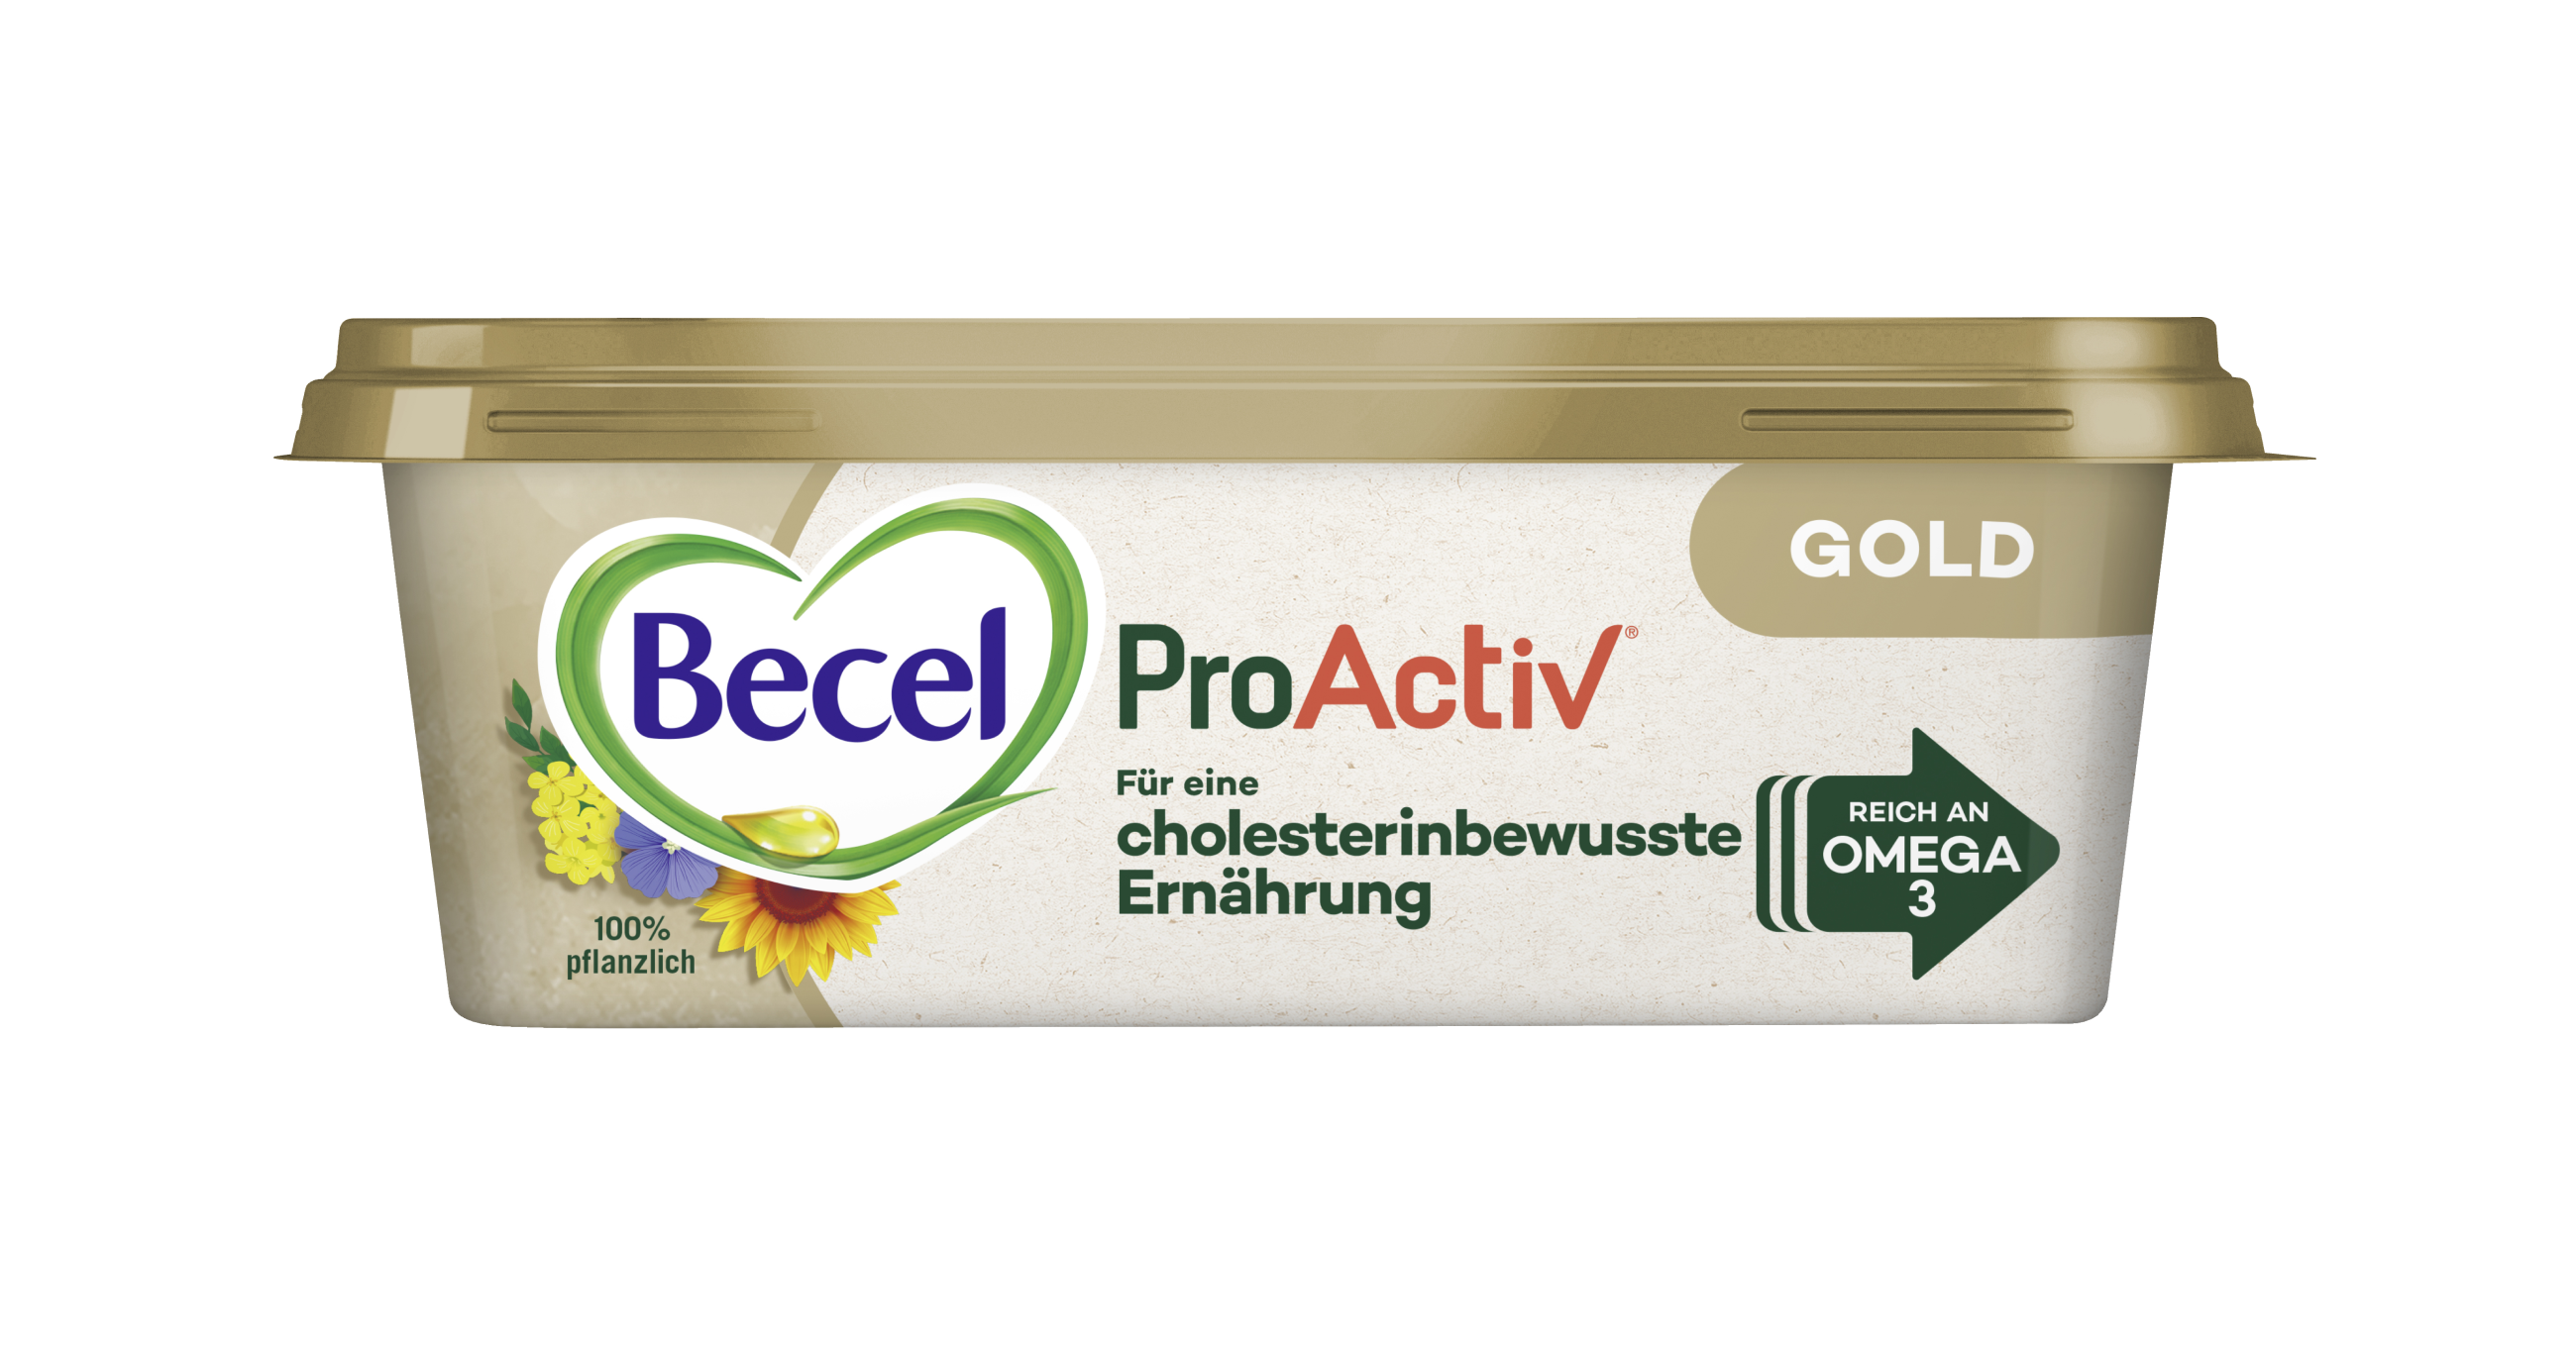 Becel ProActiv Gold